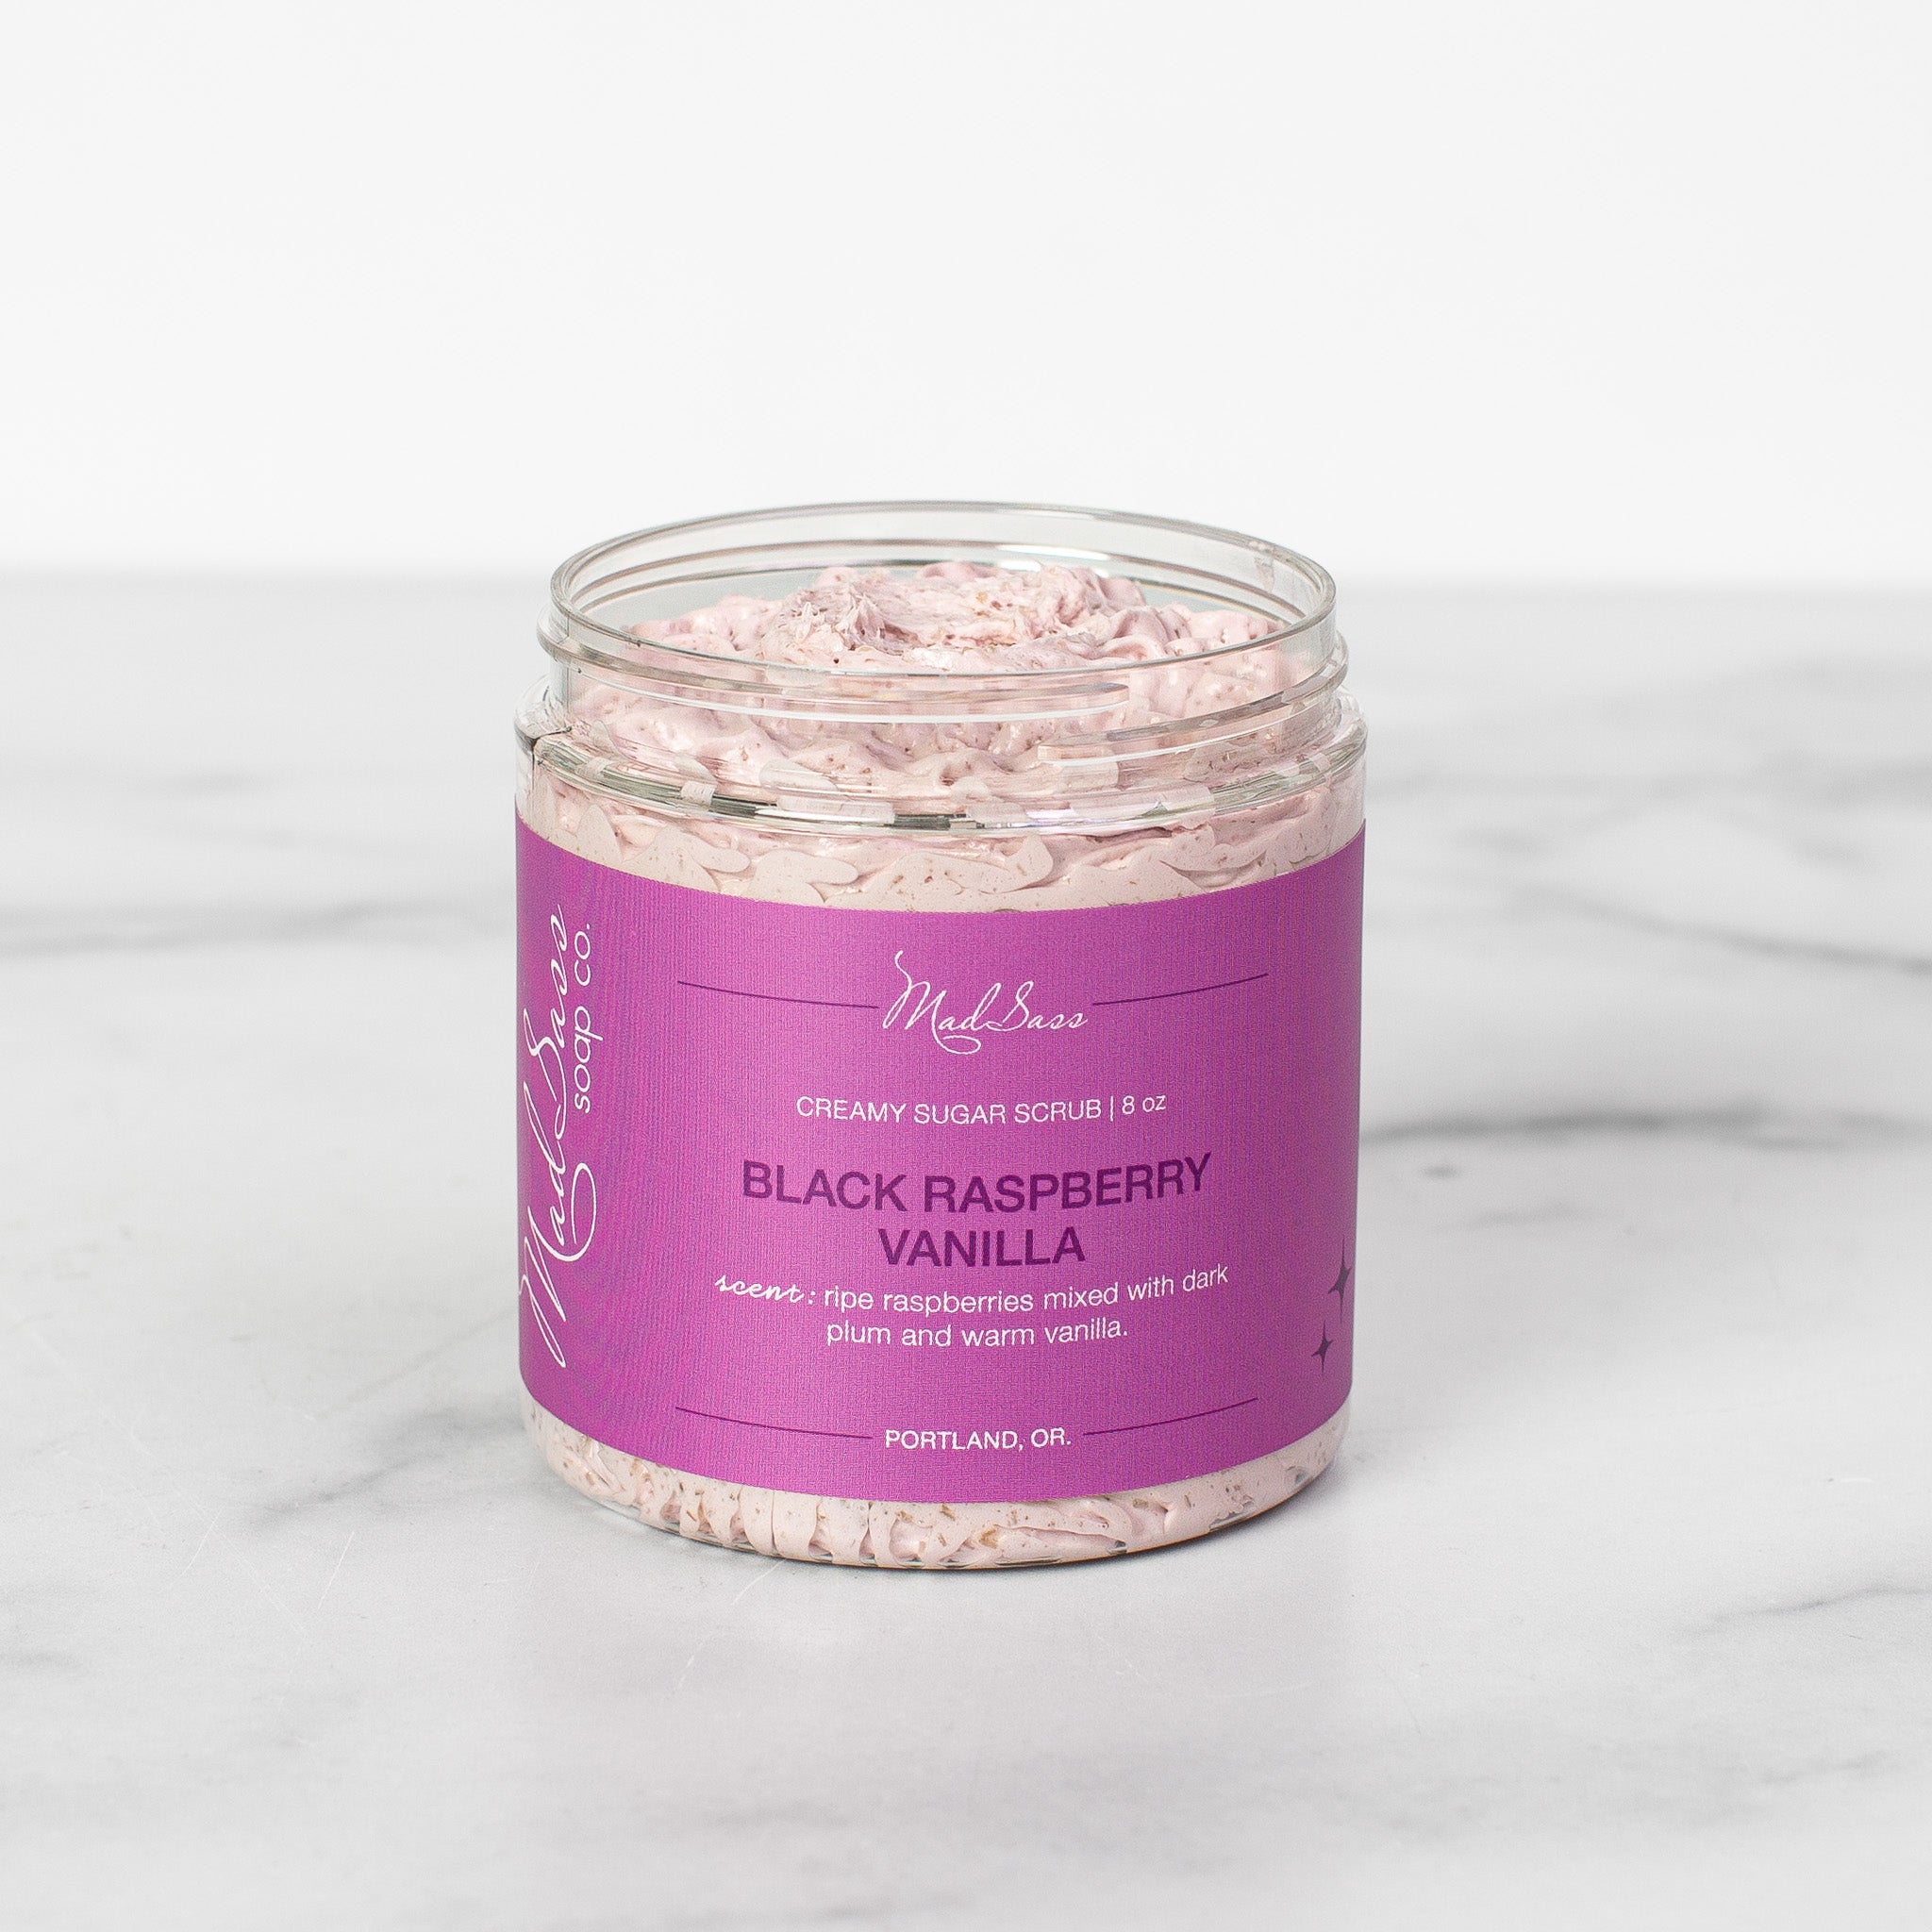 One container of Black Raspberry Vanilla Creamy Sugar Scrubs on a white background. Black Raspberry Vanilla is a light purple scrub in a clear tub.